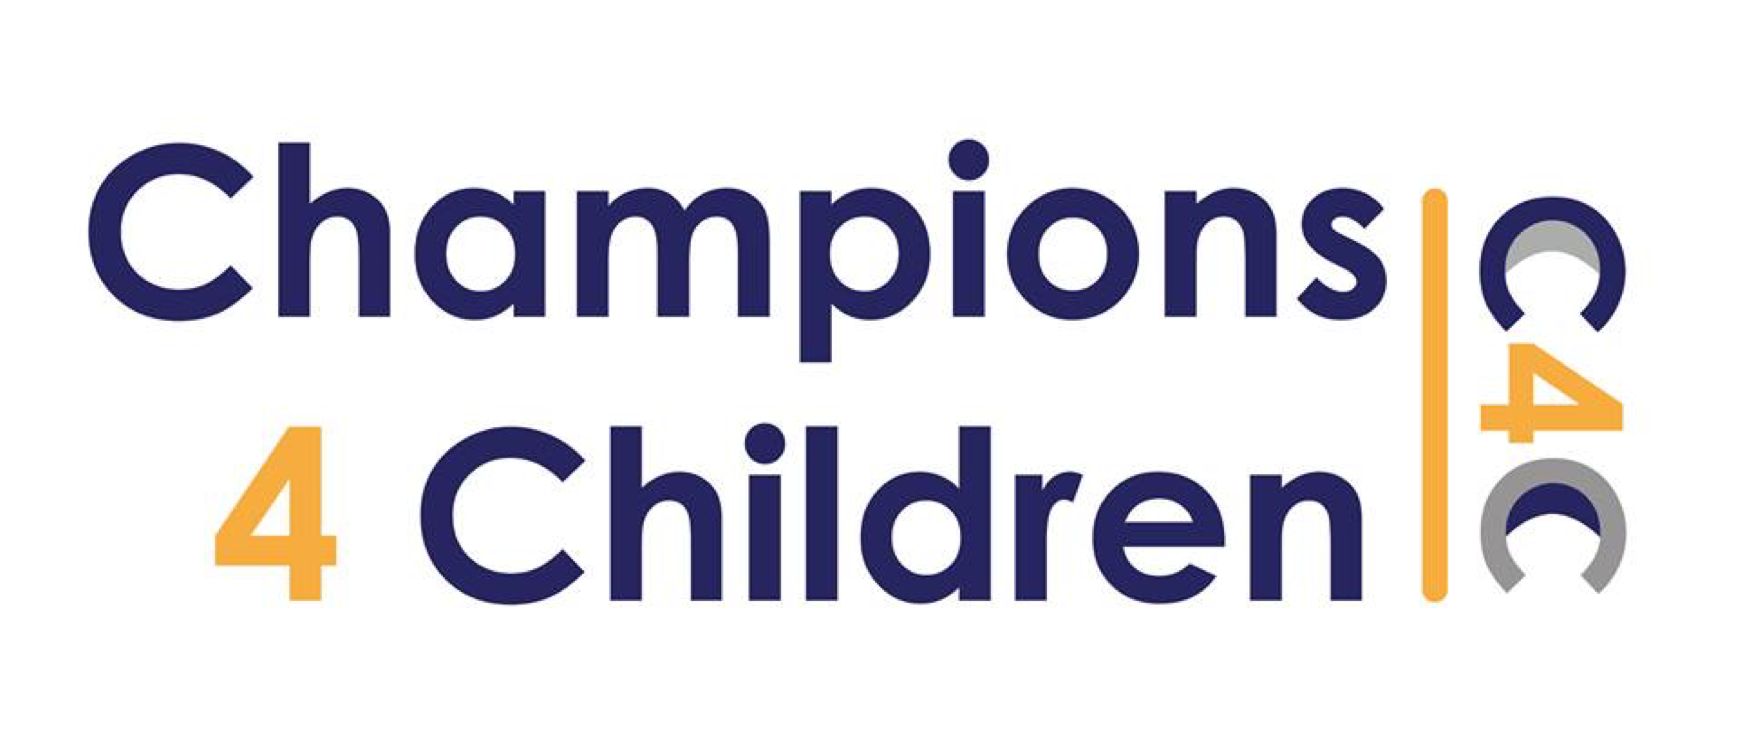 Champions 4 Children hosts 10th annual weekend benefit